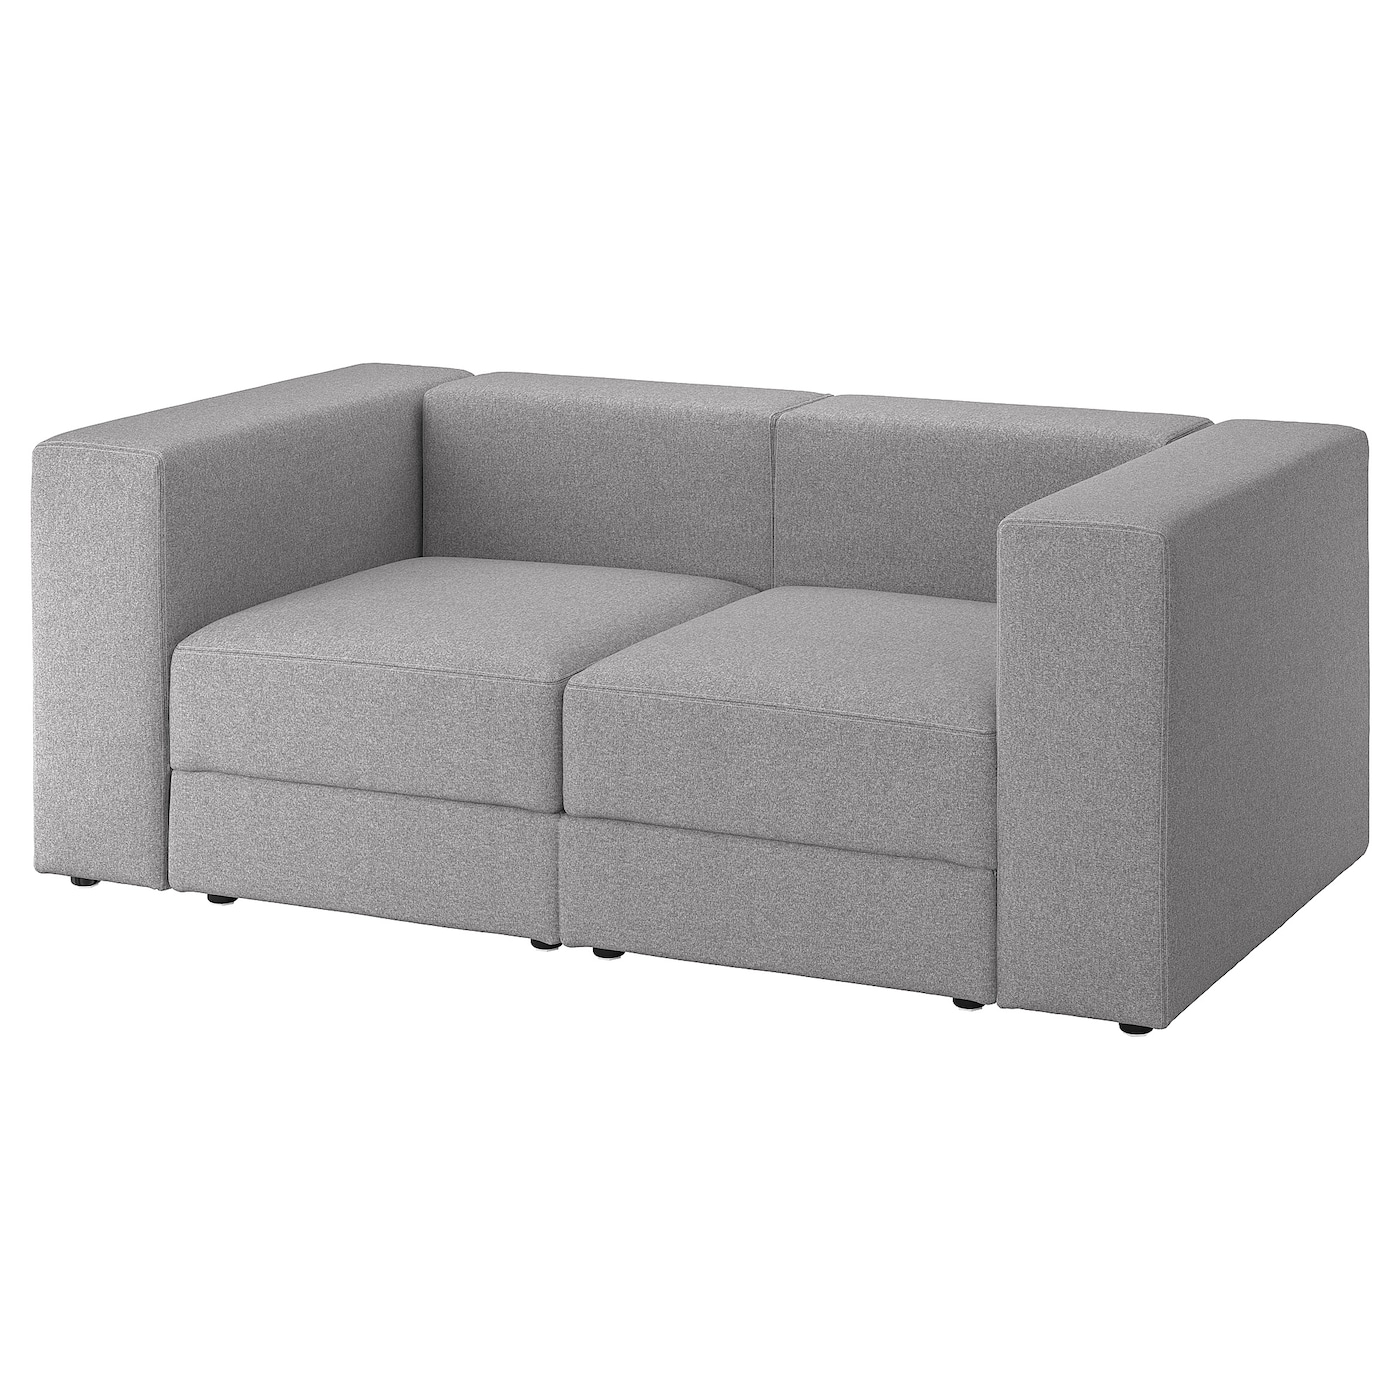 2-местный диван - IKEA JÄTTEBO/JATTEBO, 71x95x190см, серый/светло-серый, ЙЕТТЕБО ИКЕА